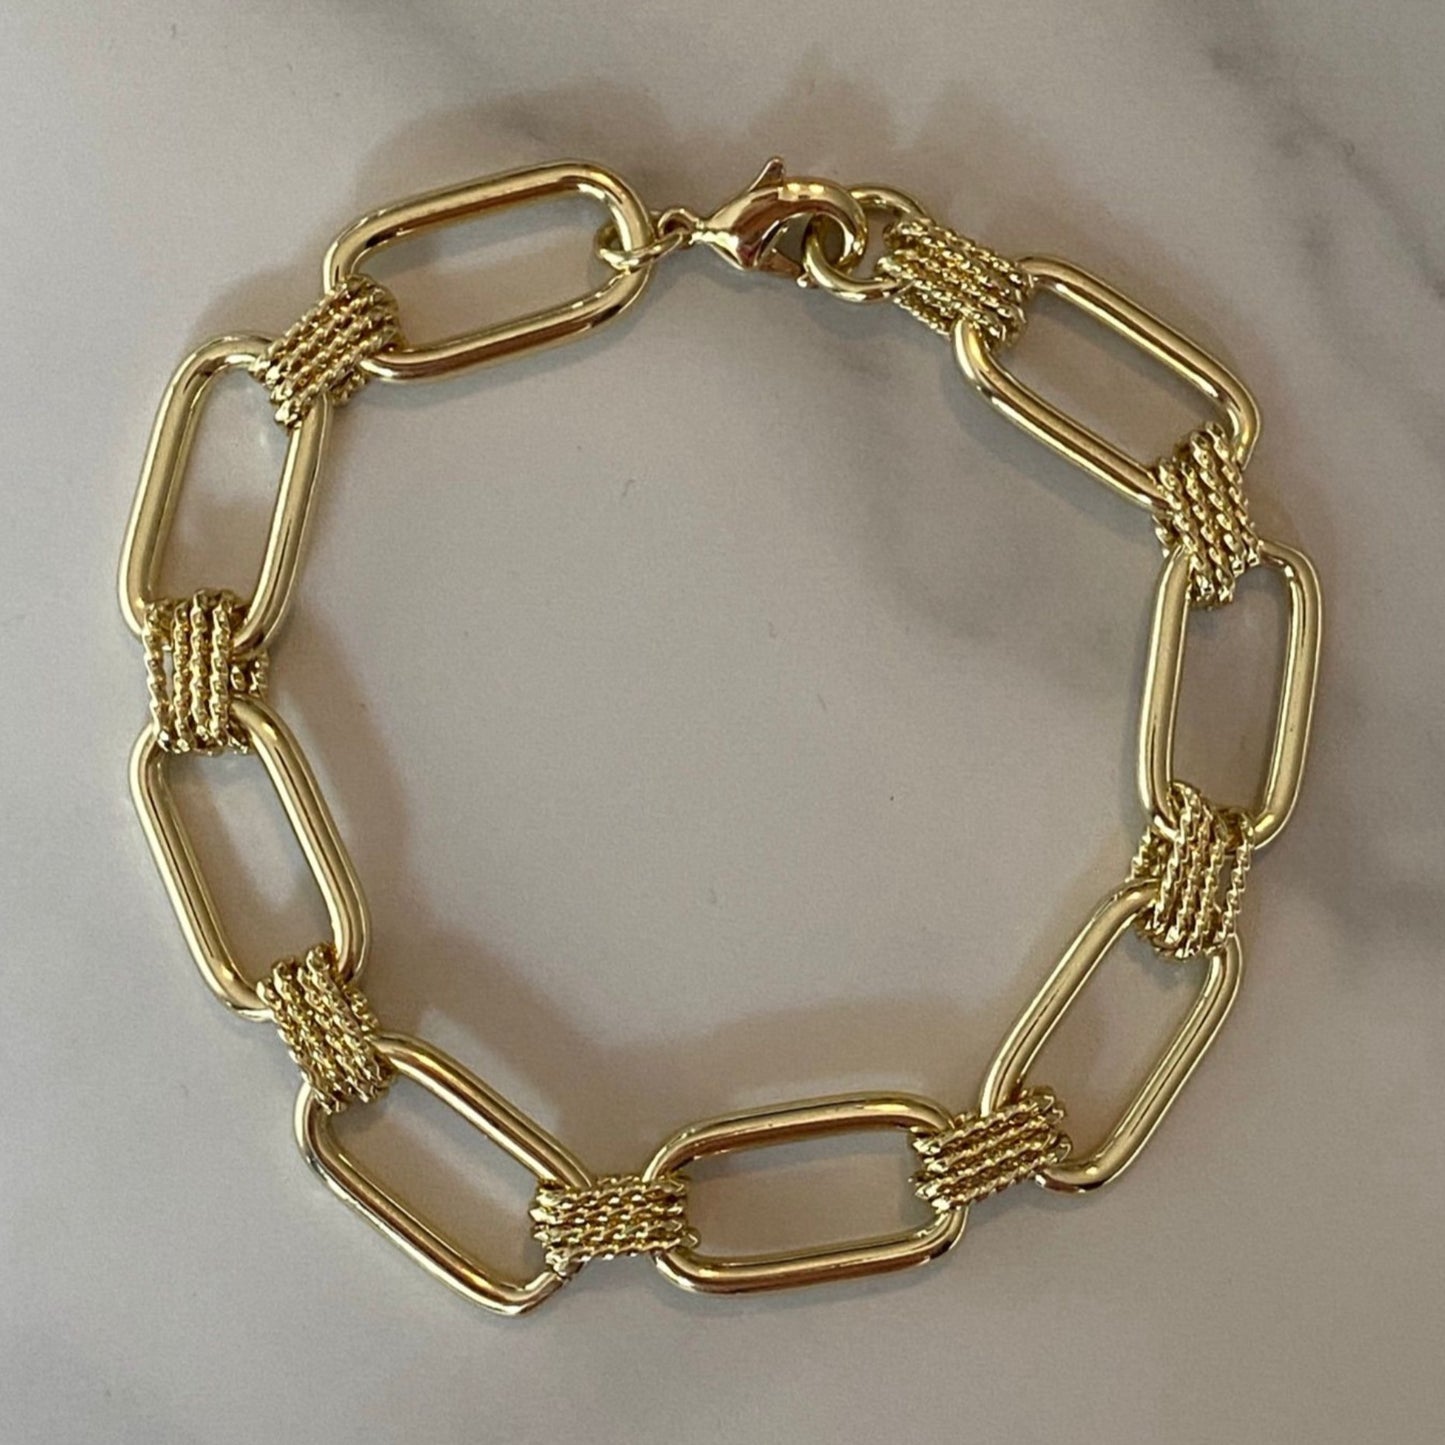 Kina gold-filled bracelet by ISVI Boutique Miami